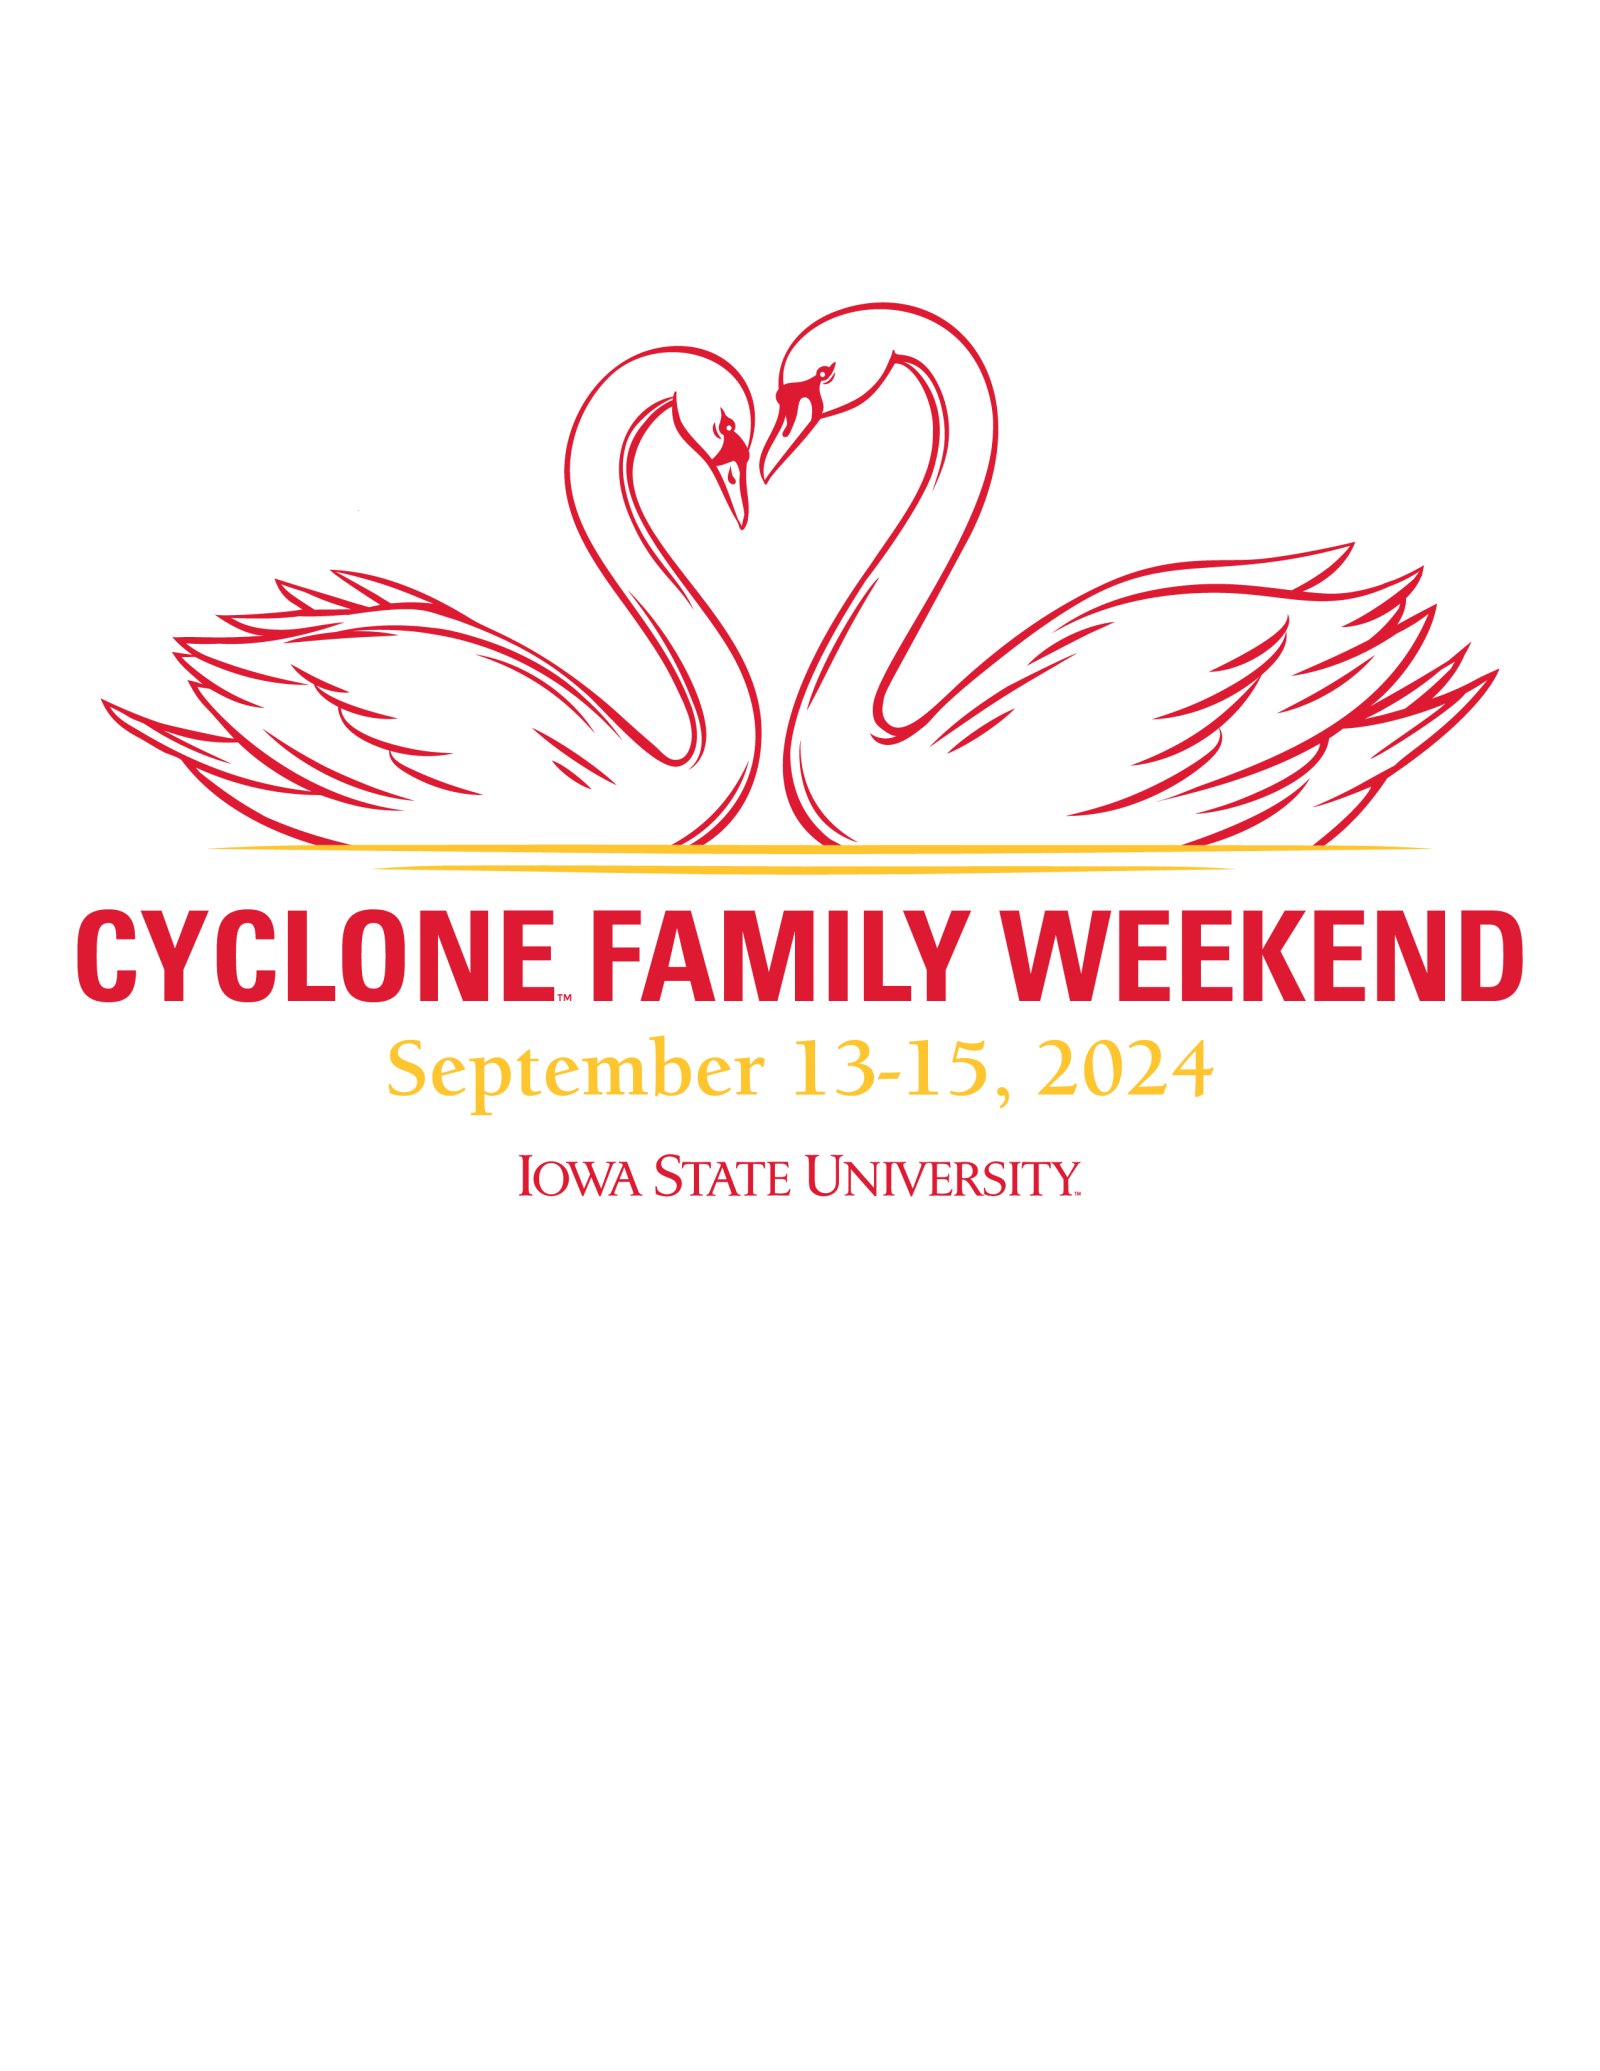 Cyclone Family Weekend logo